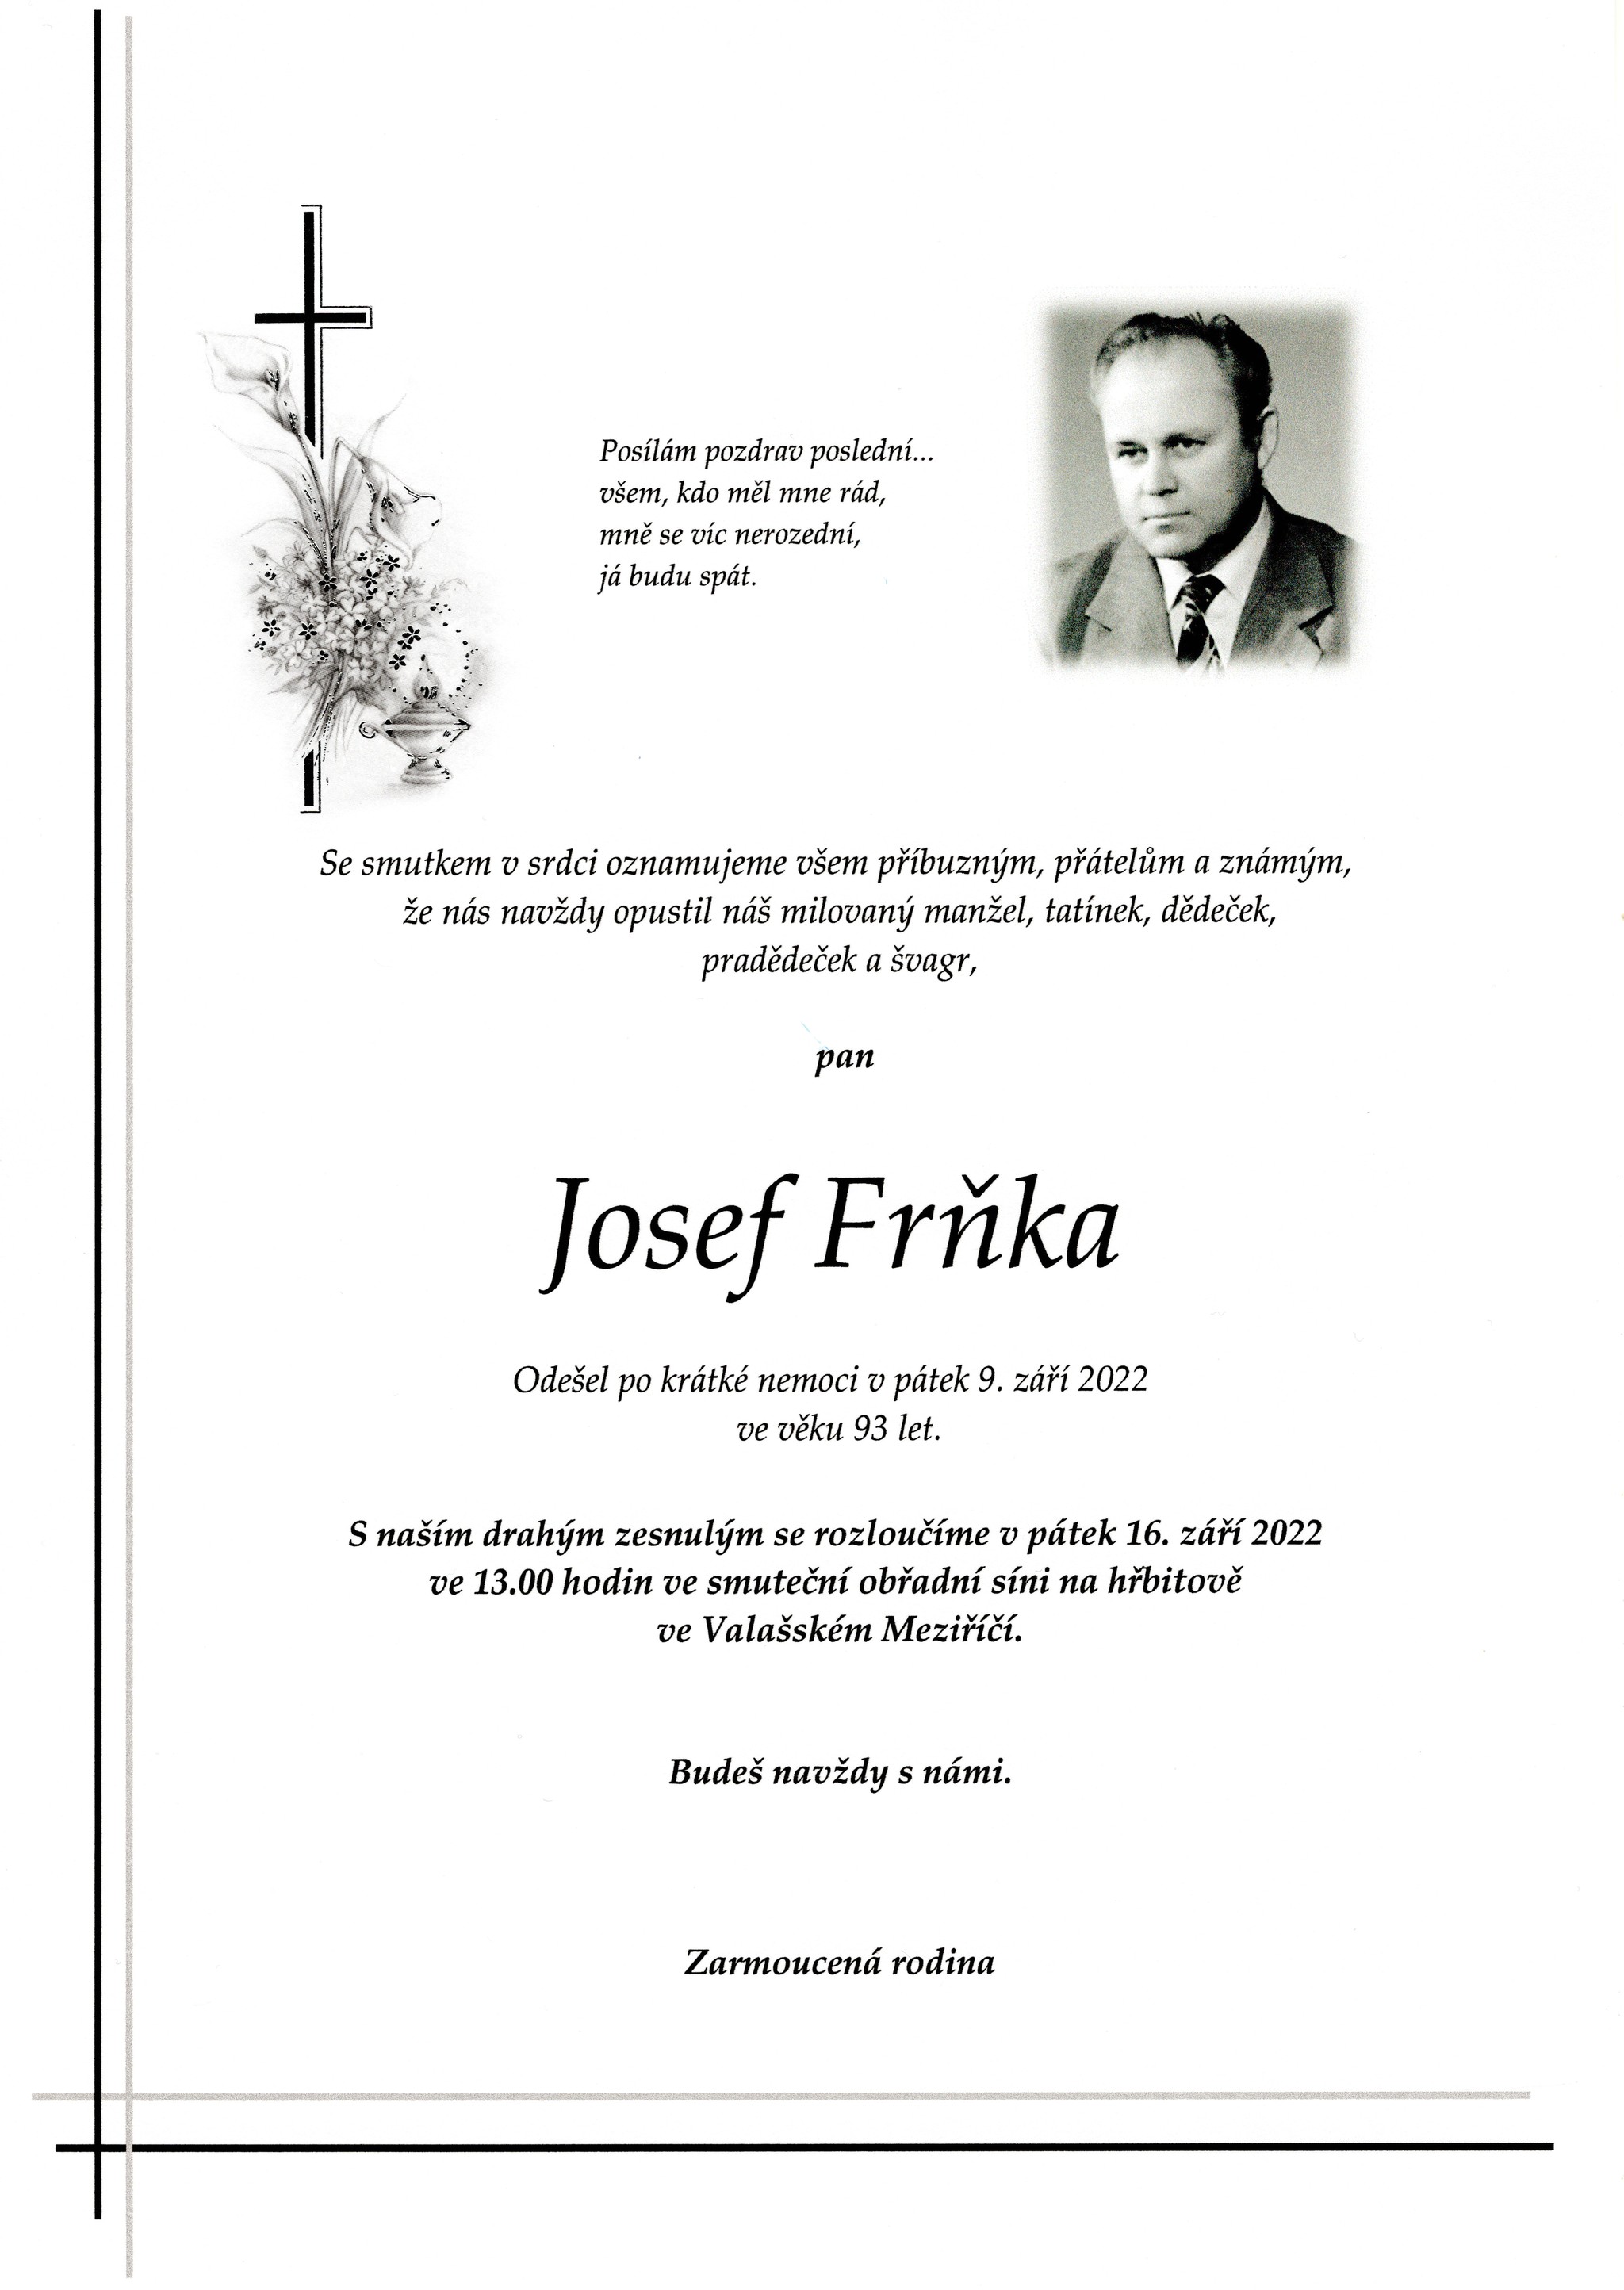 Josef Frňka